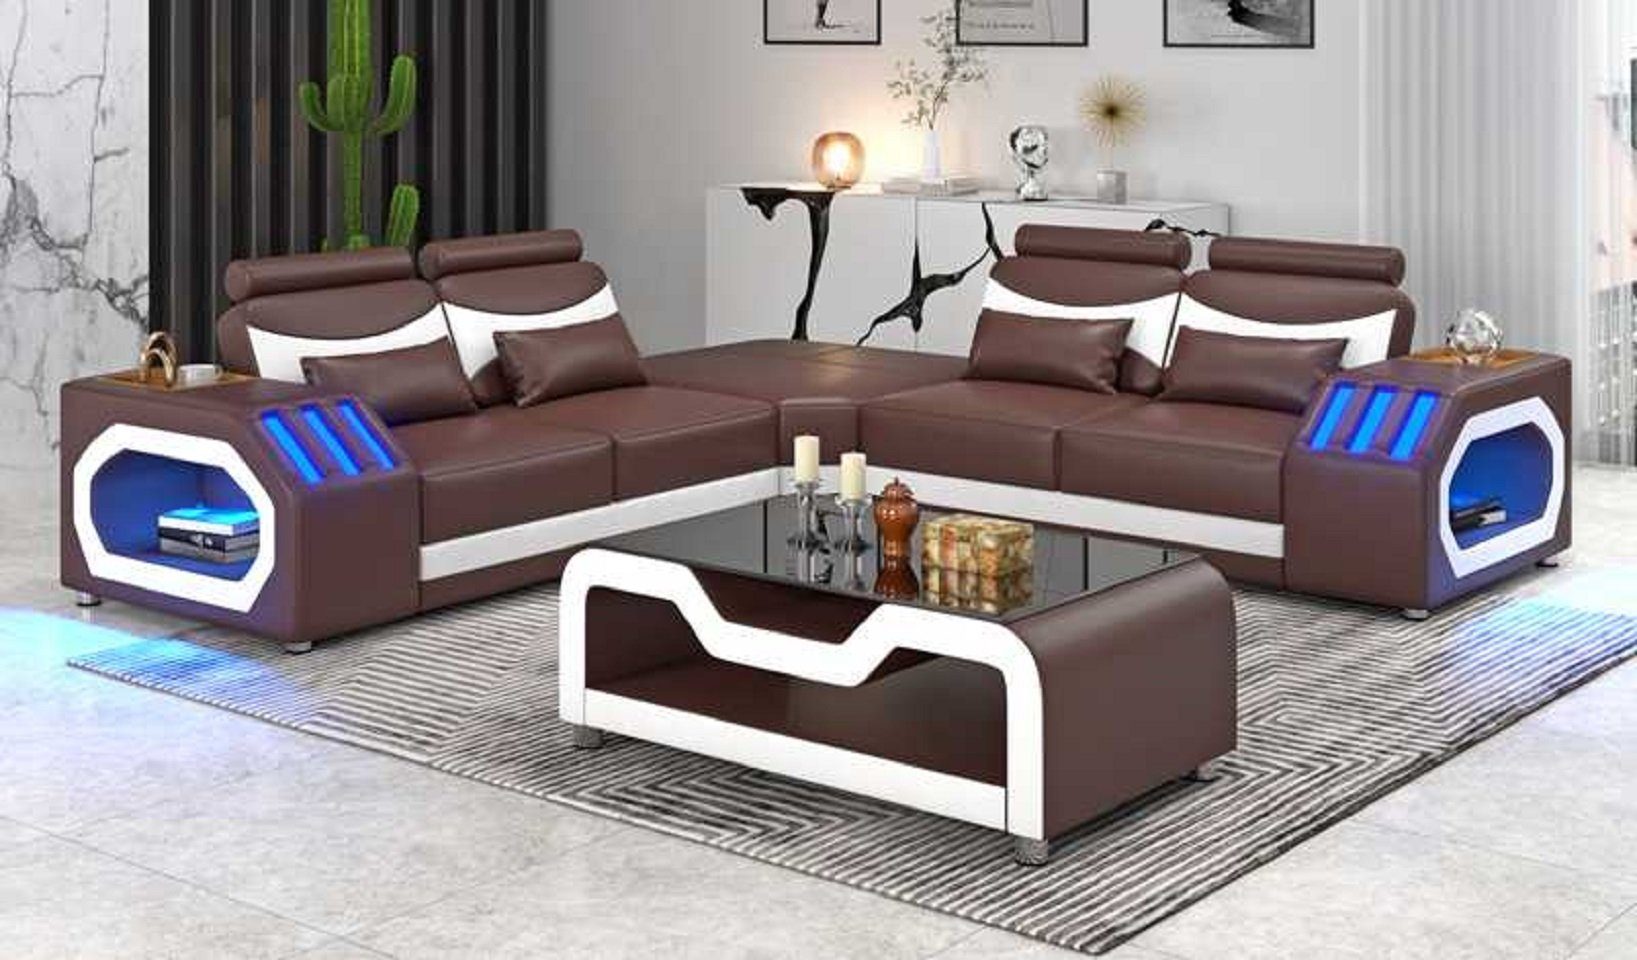 JVmoebel Ecksofa Teile, Eckgarnitur in Couch L Made Ecksofa Sofa Form 3 Europe Ledersofa Luxus Moderne, Braun